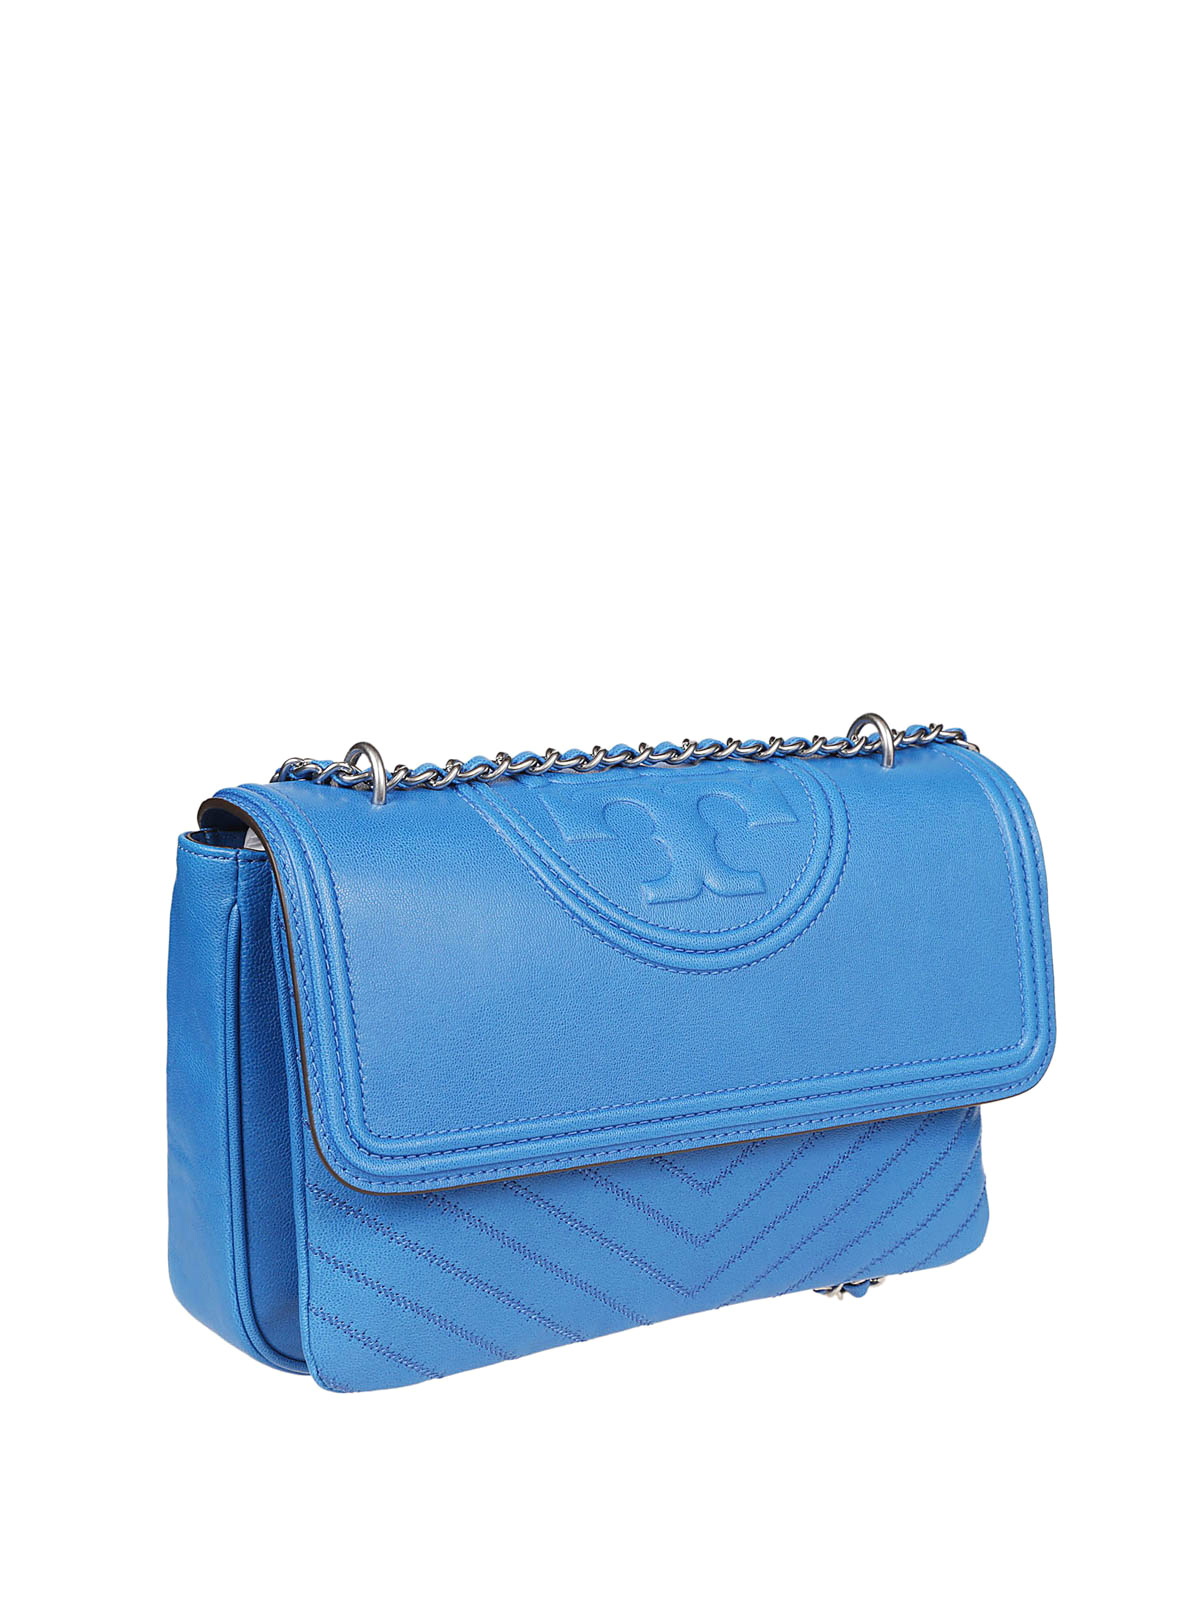 NWT Tory Burch Classic Britten Leather tote handbag Blue Cloud $475  Authentic | eBay